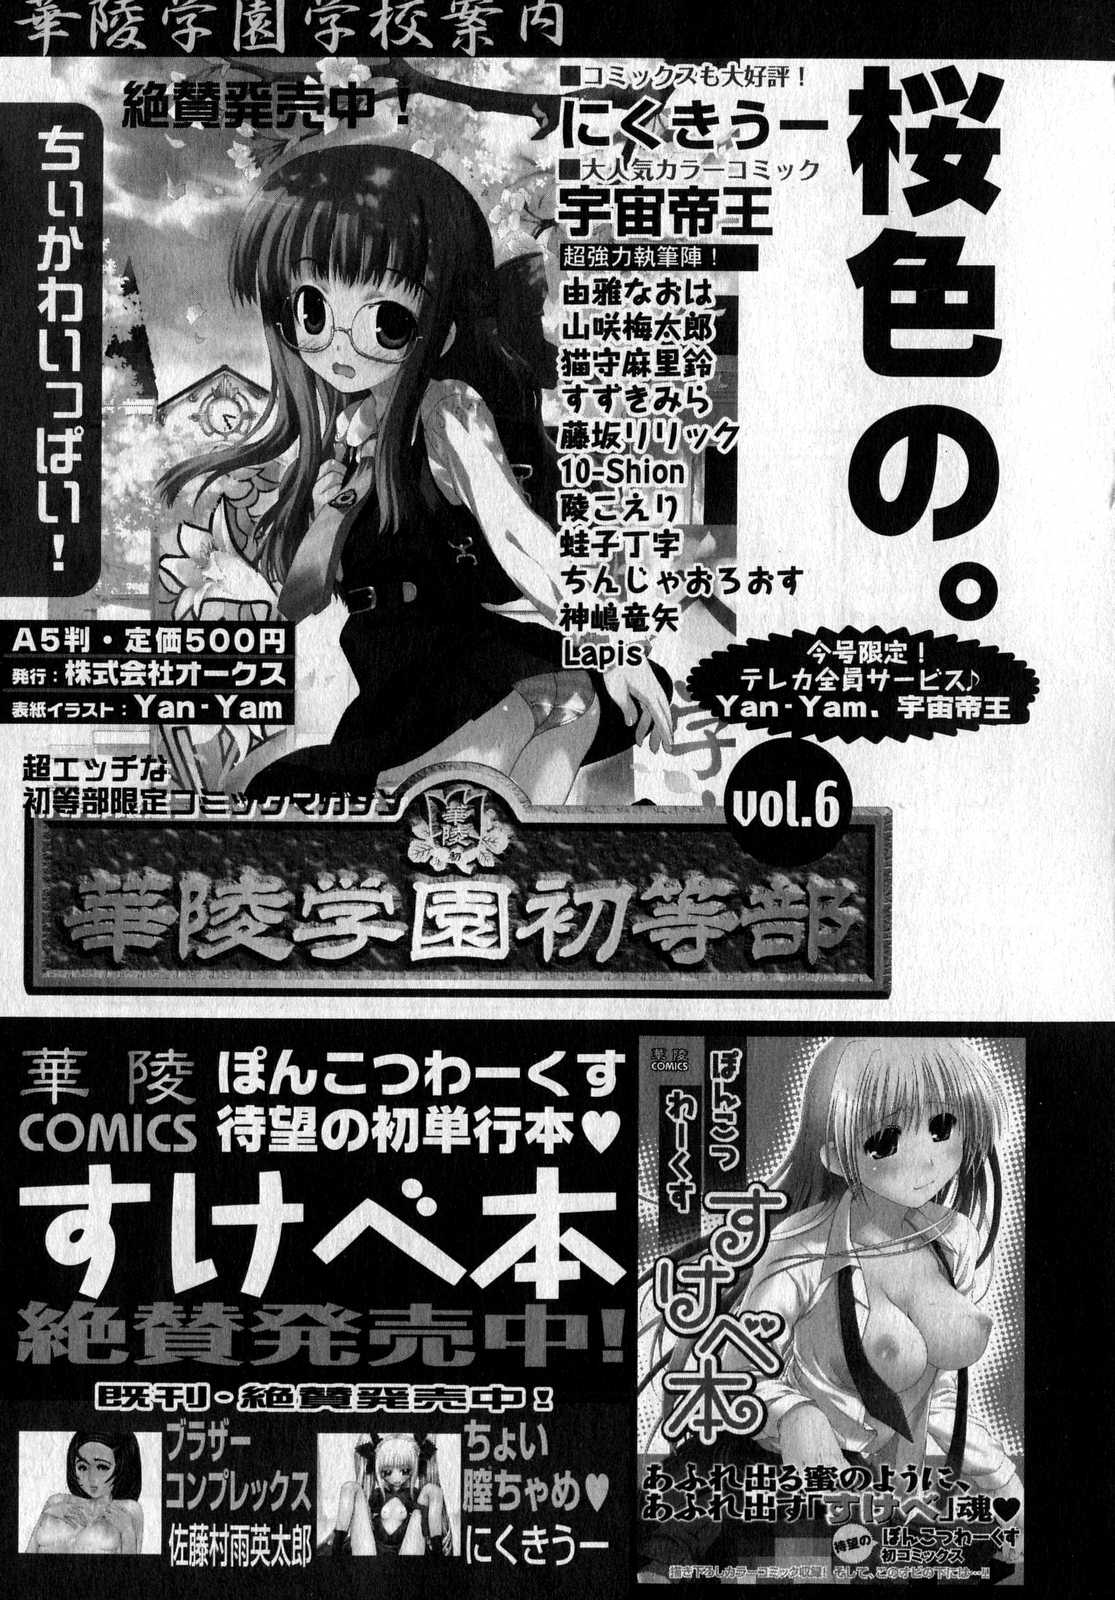 COMIC XO 2007年6月号 Vol.13